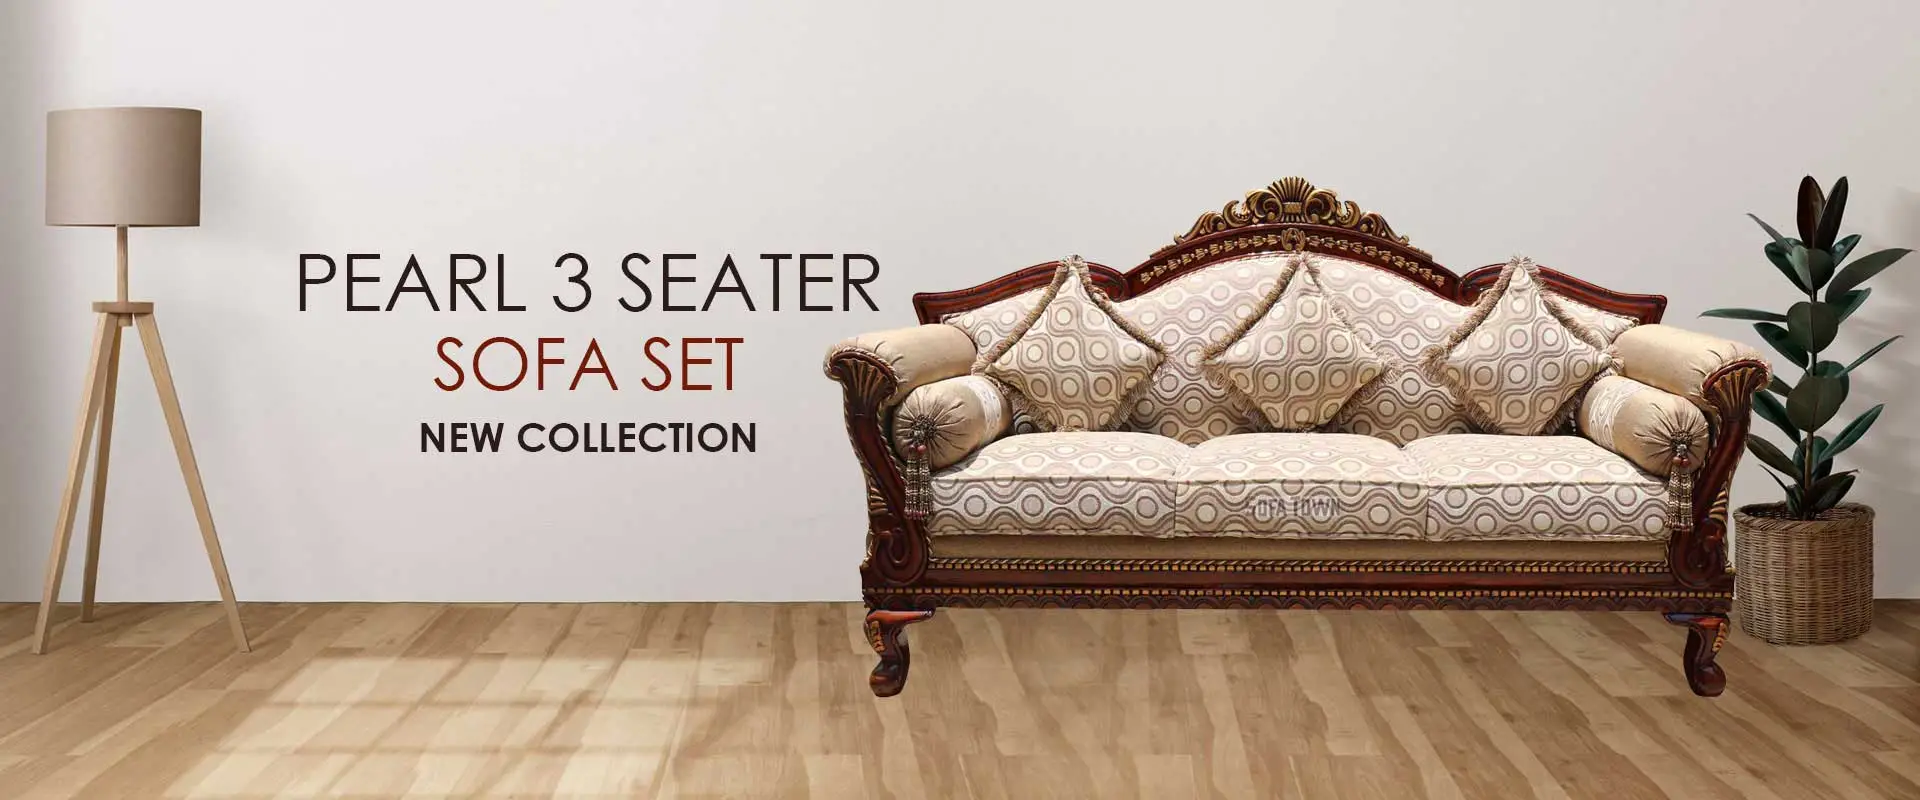 Pearl 3 Seater Sofa Set  Manufacturers in Jammu And Kashmir